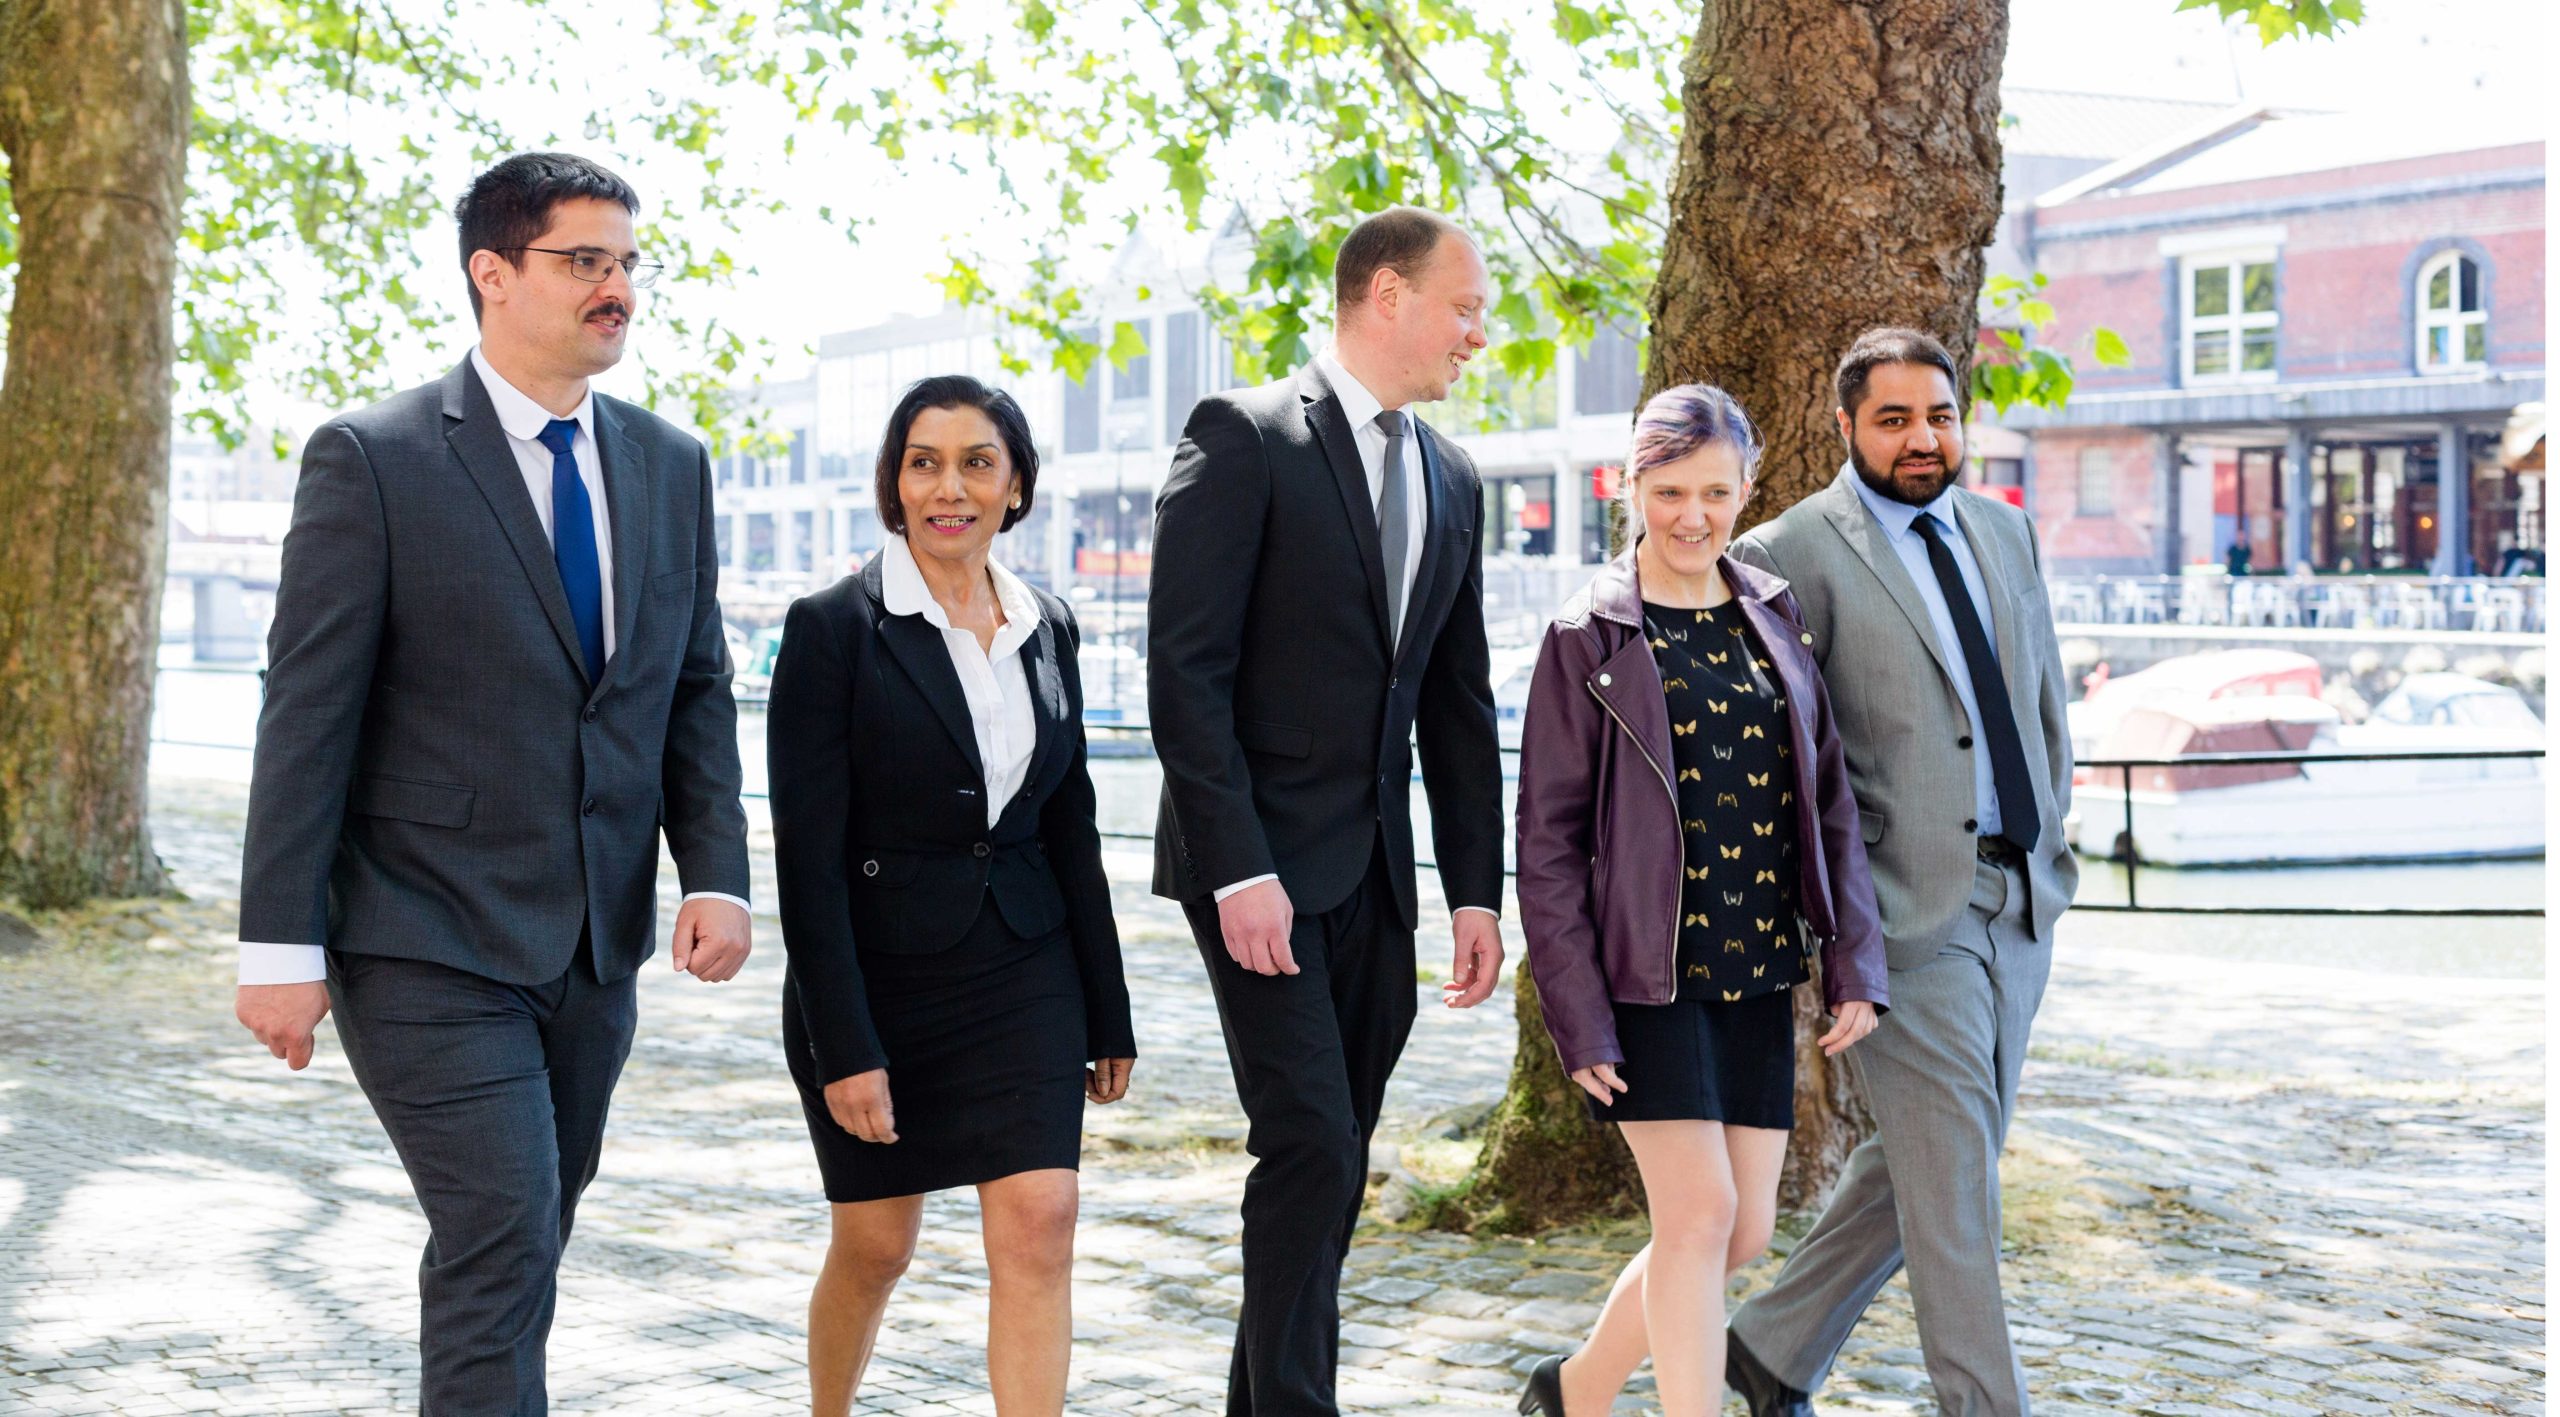 Men and women walking in business attire